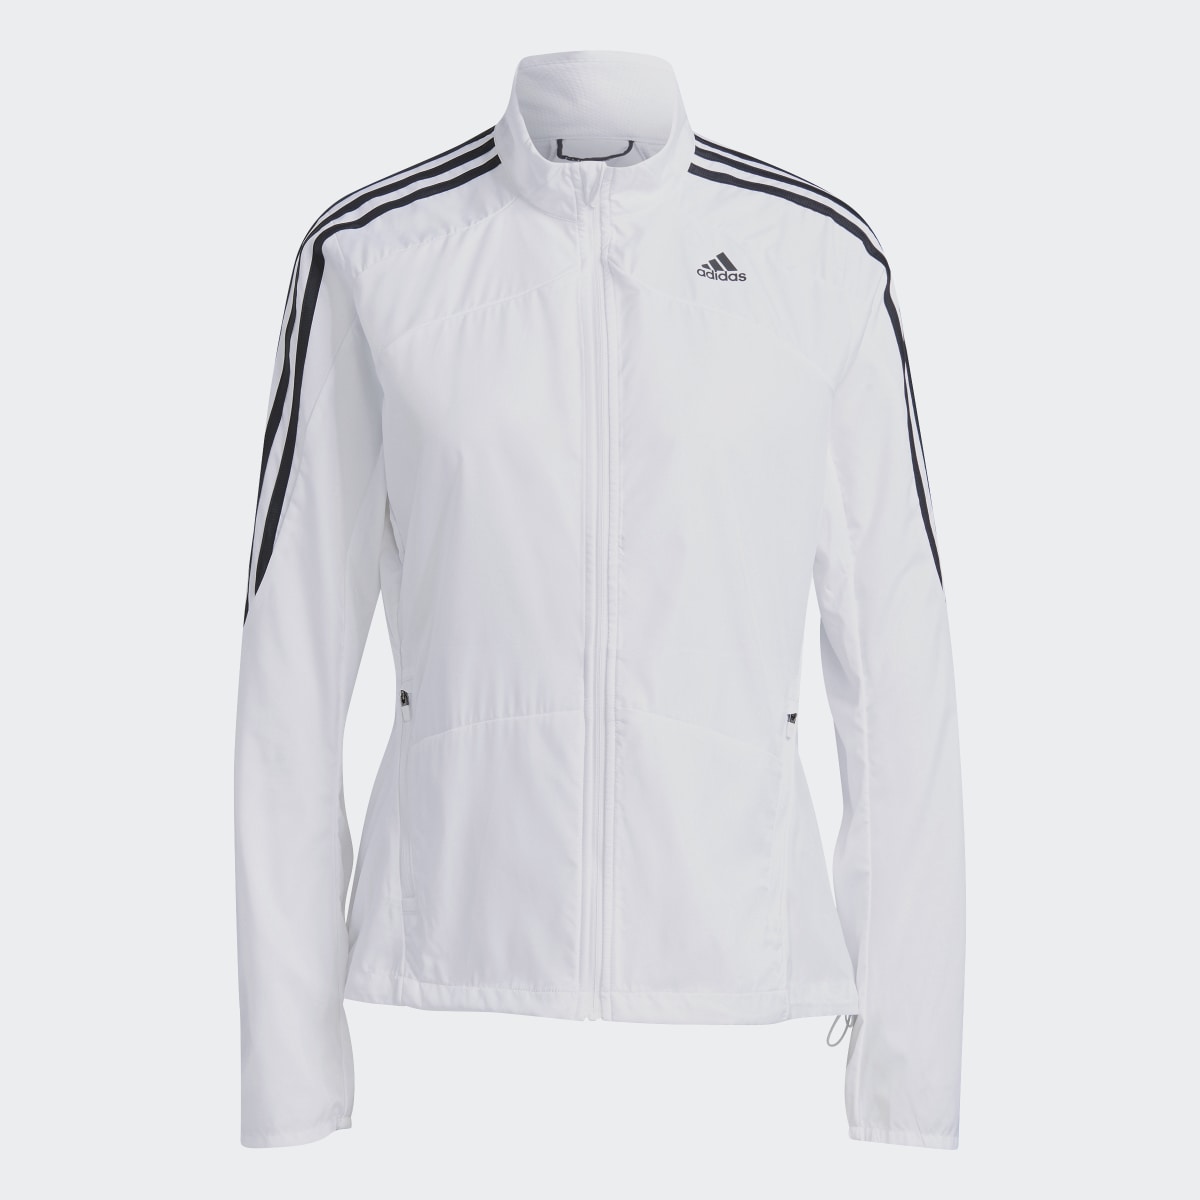 Adidas Marathon 3-Stripes Jacket. 6